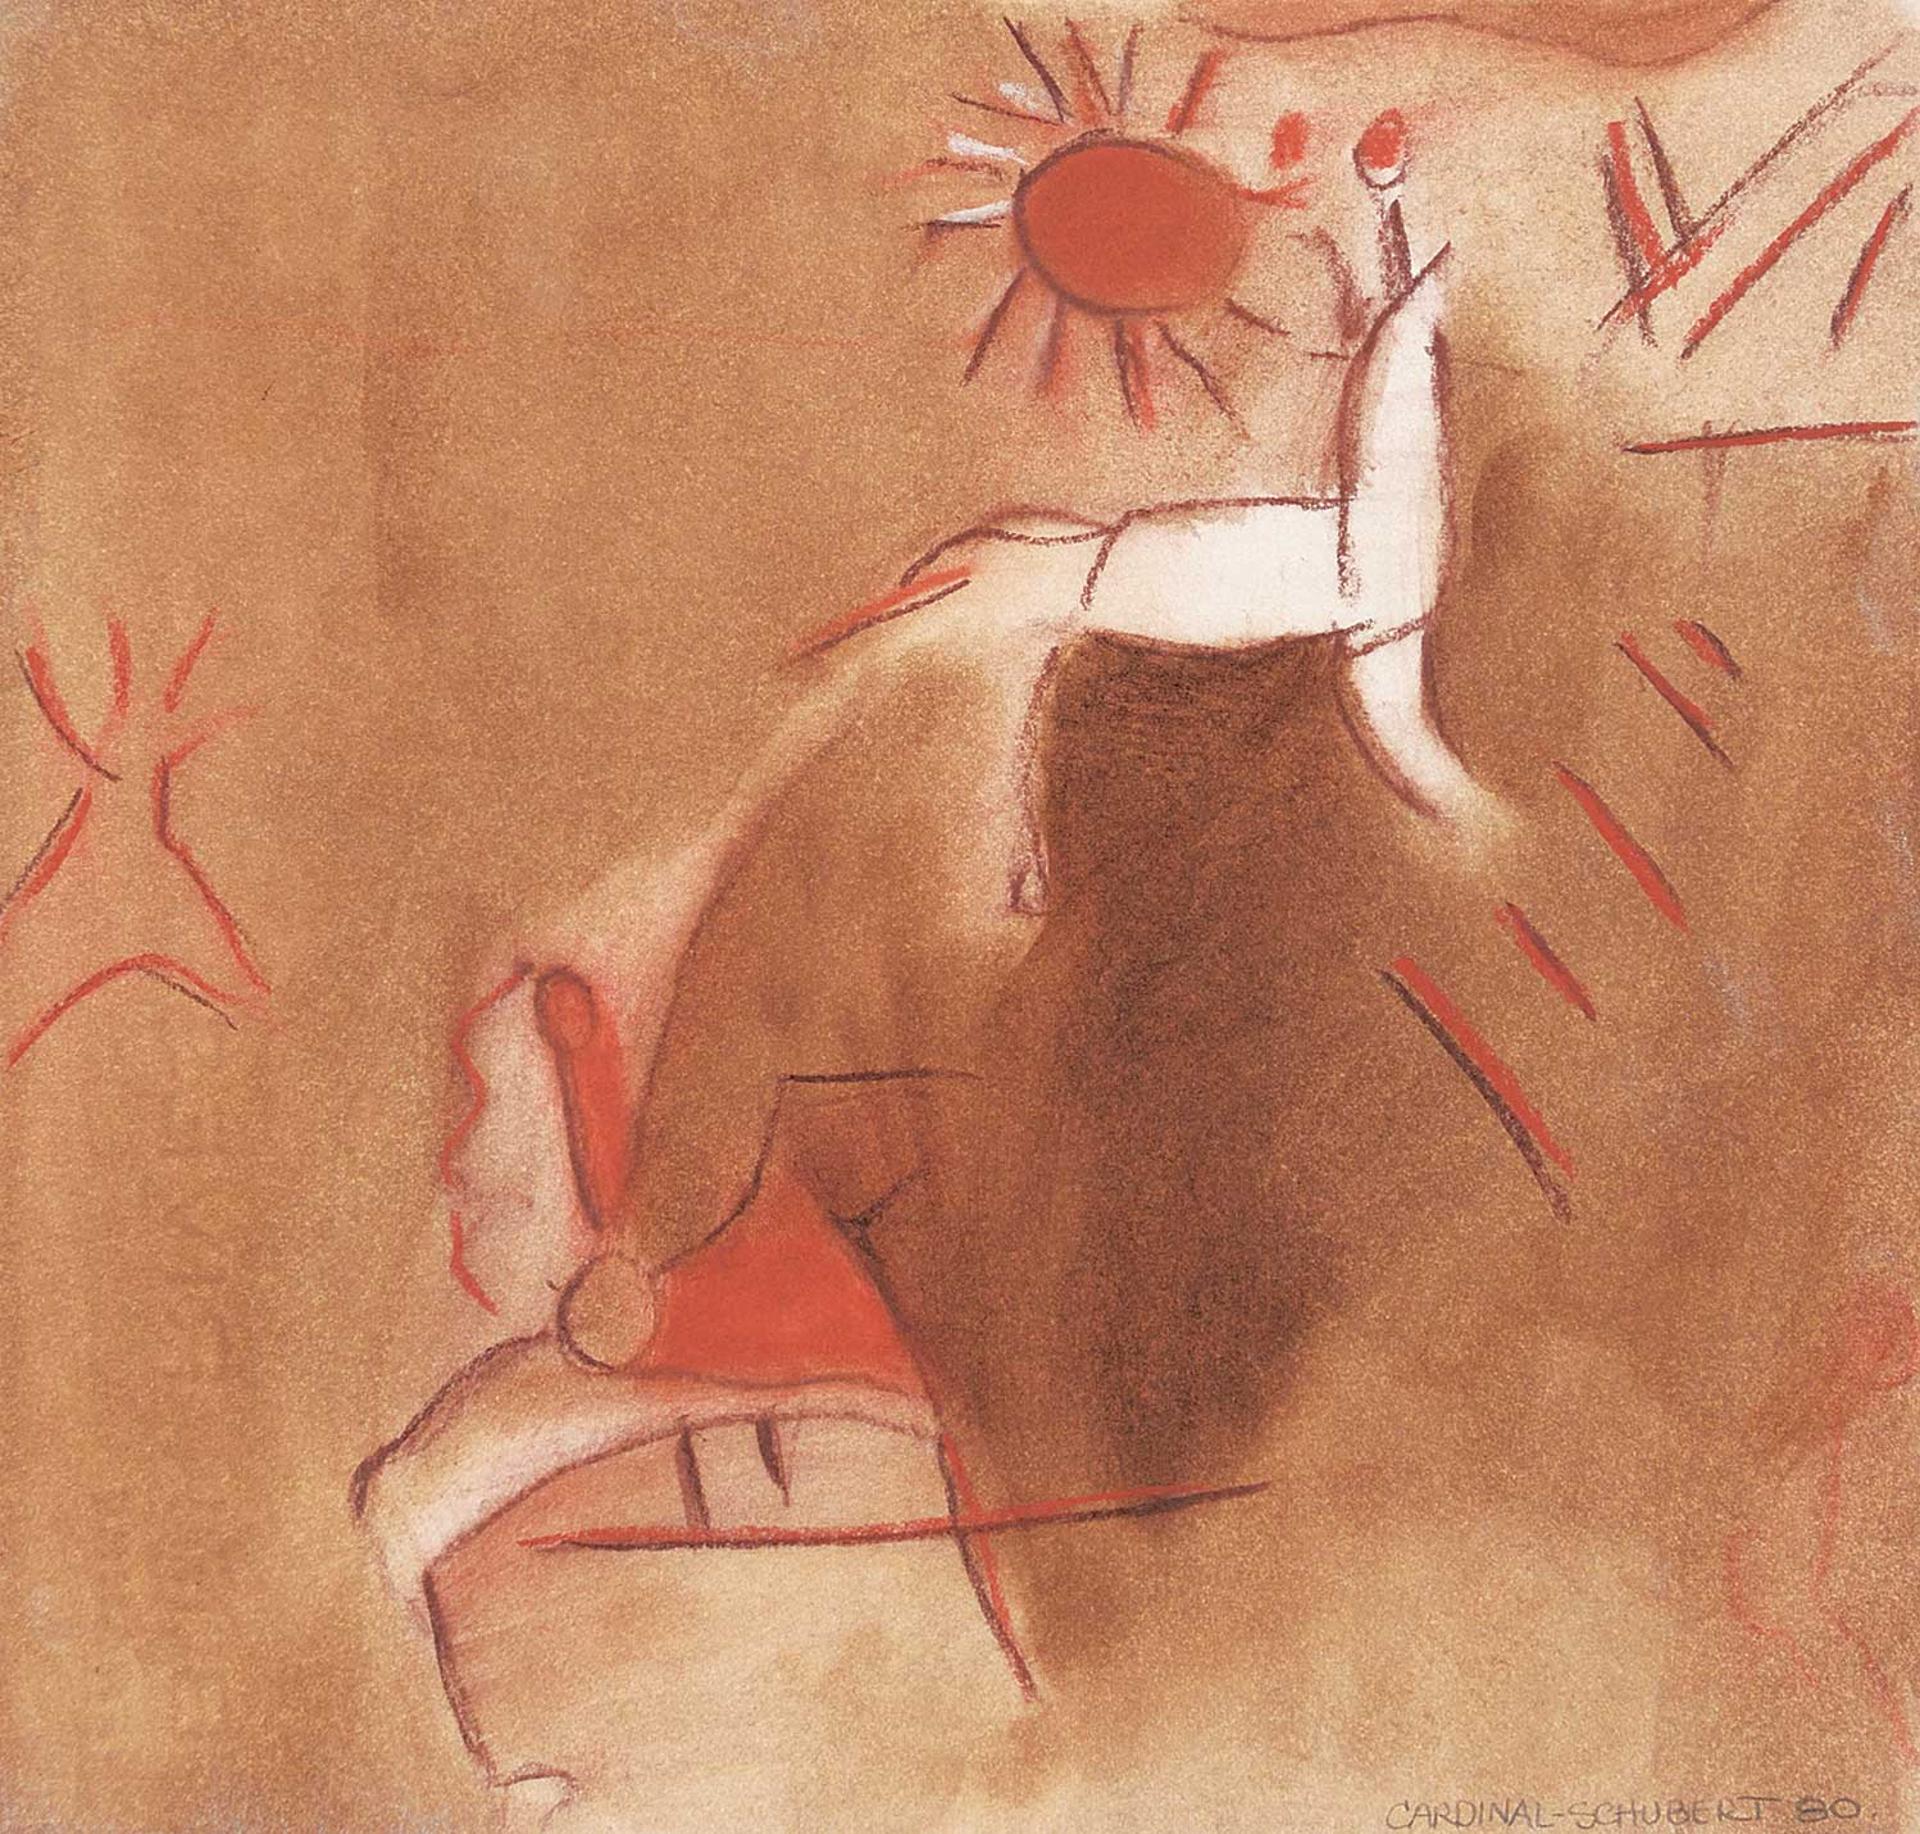 Joane Cardinal-Schubert (1942-2009) - Untitled - Sun Rider